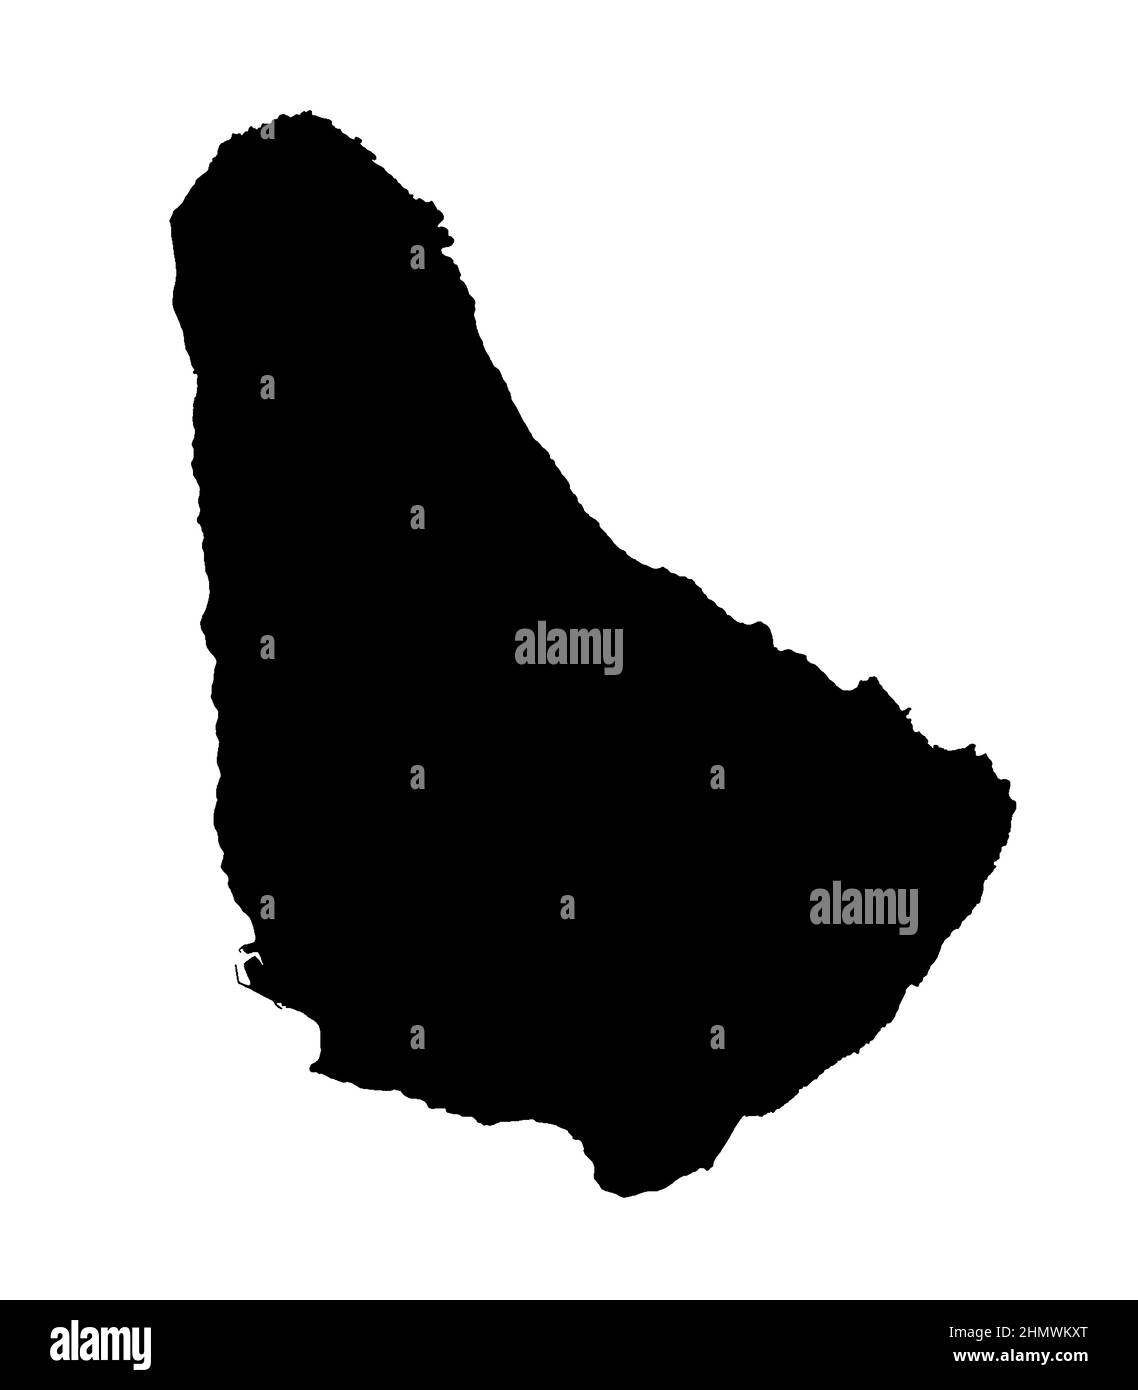 Mapa de la silueta de la isla caribeña de Barbados aislado sobre un fondo blanco Foto de stock